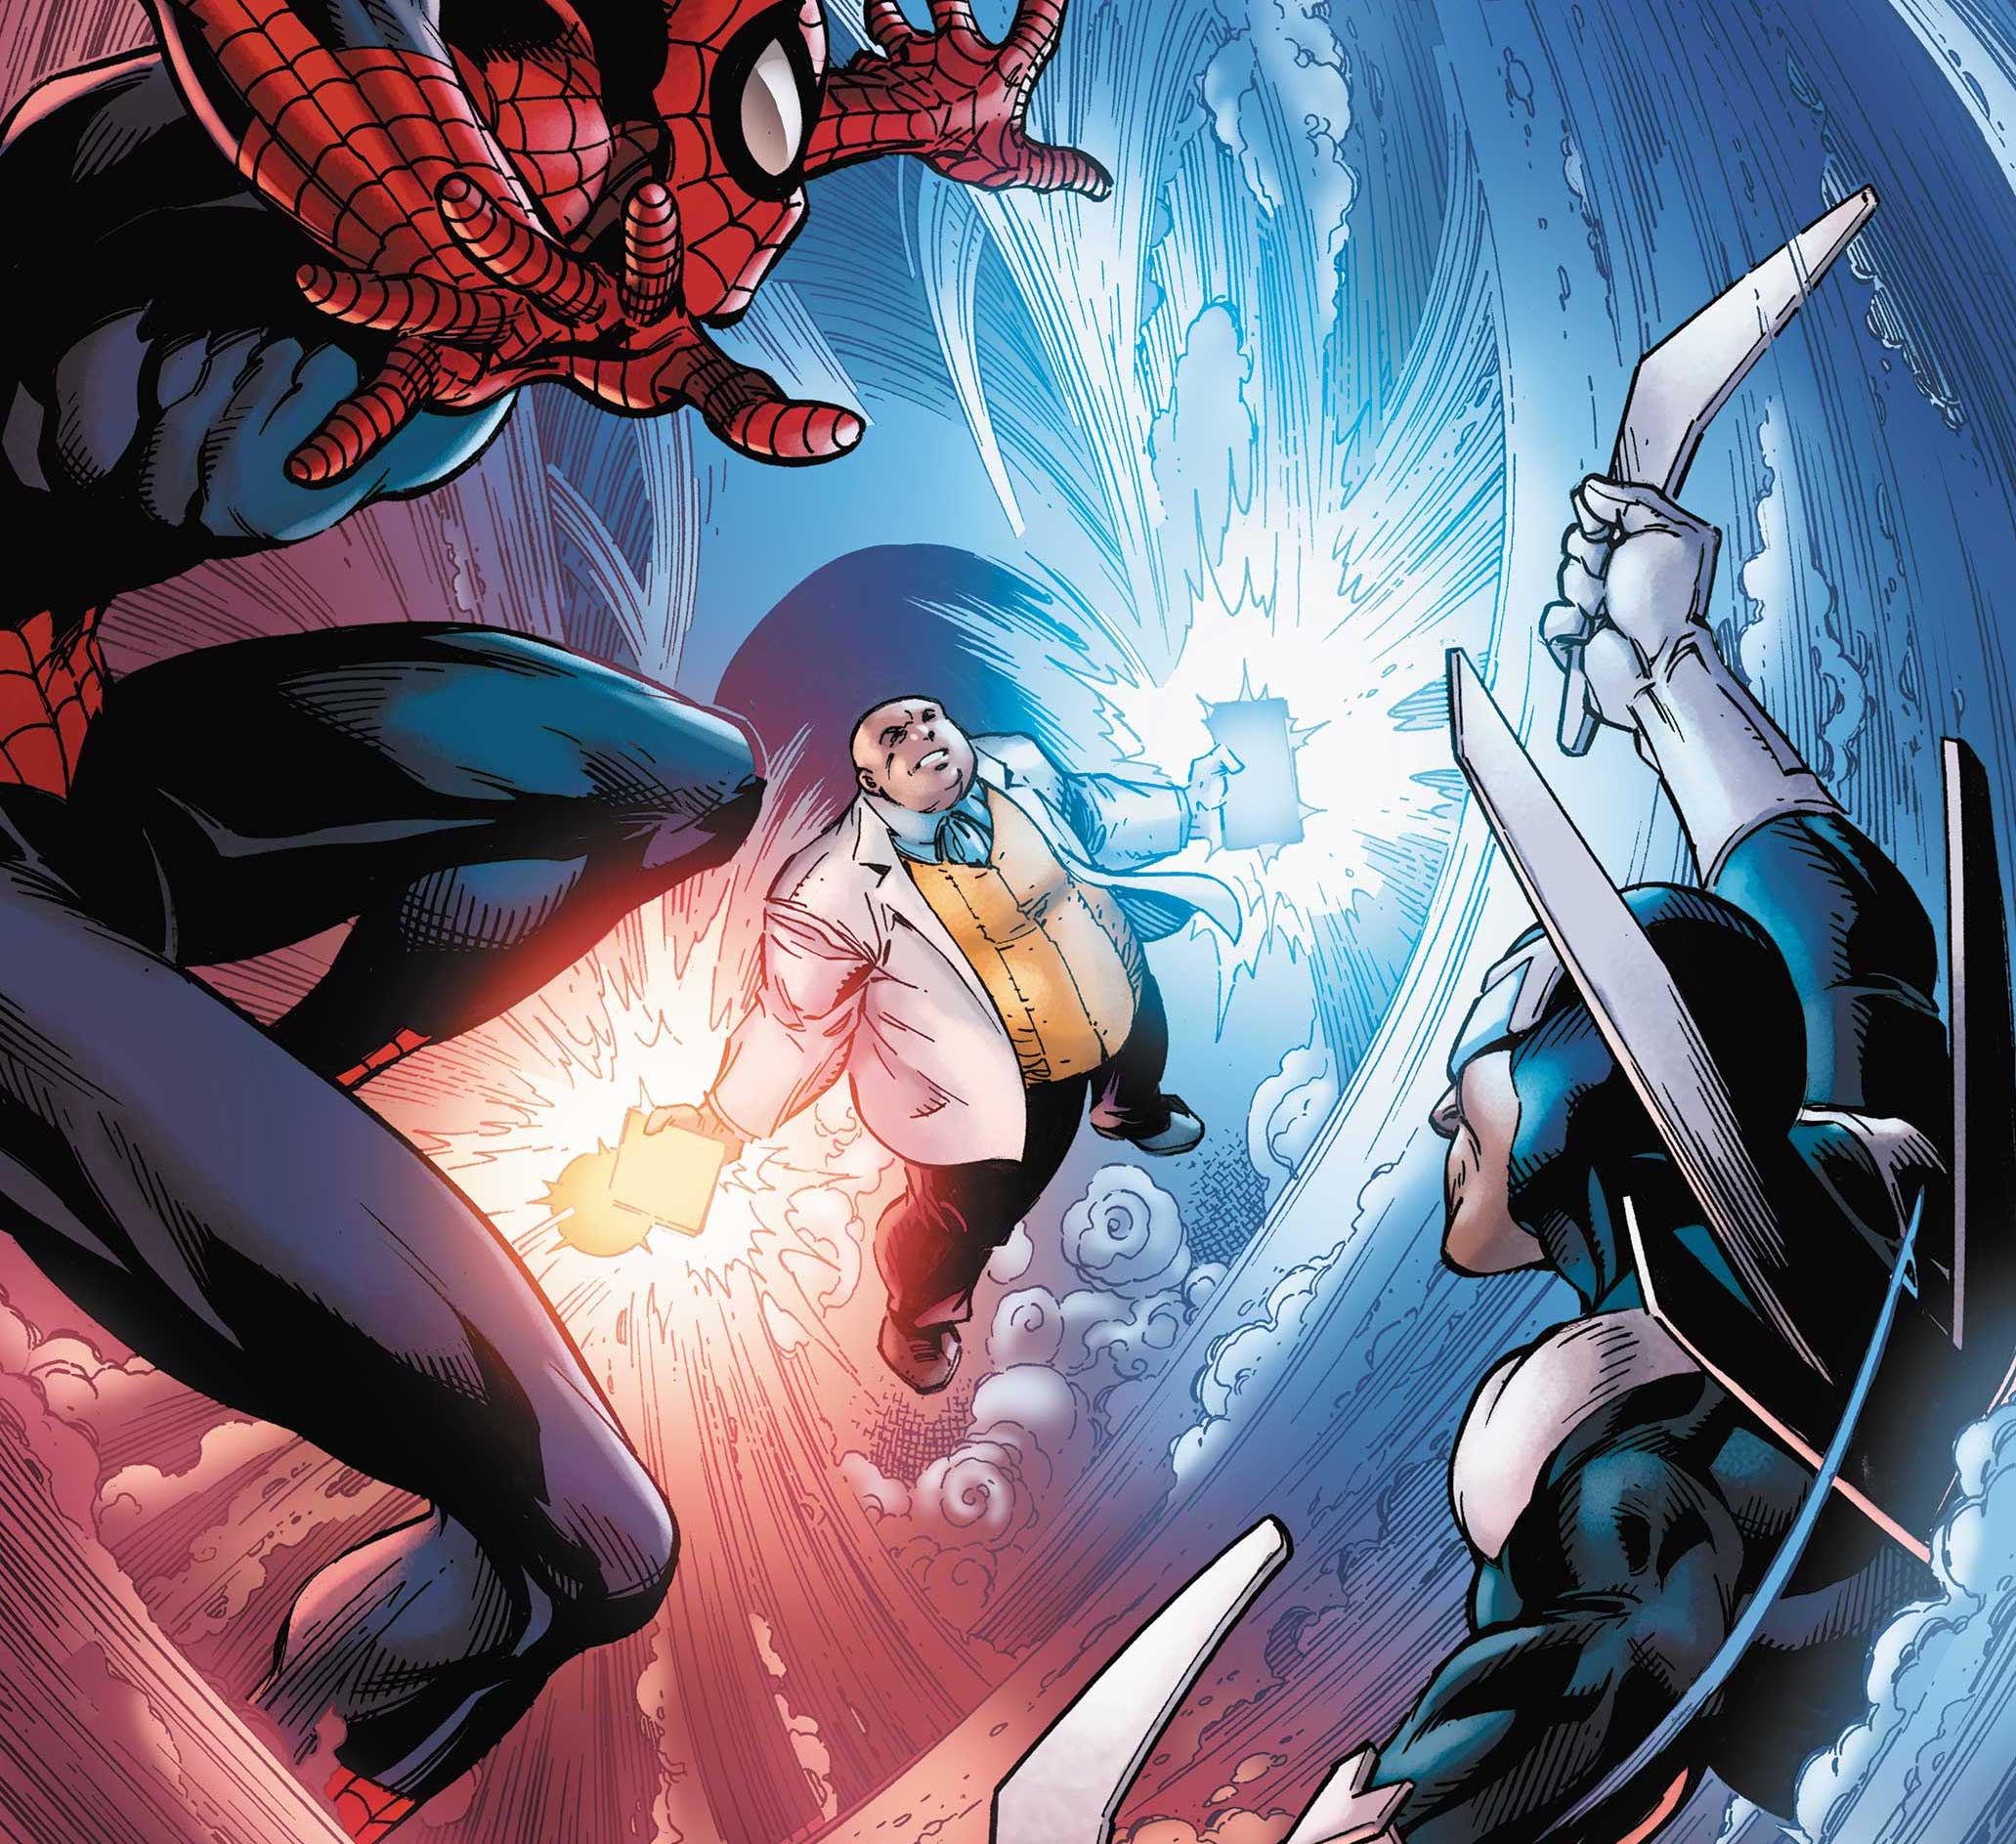 Marvel promises Kingpin's master plan revealed in giant-size Spider-Man one-shot